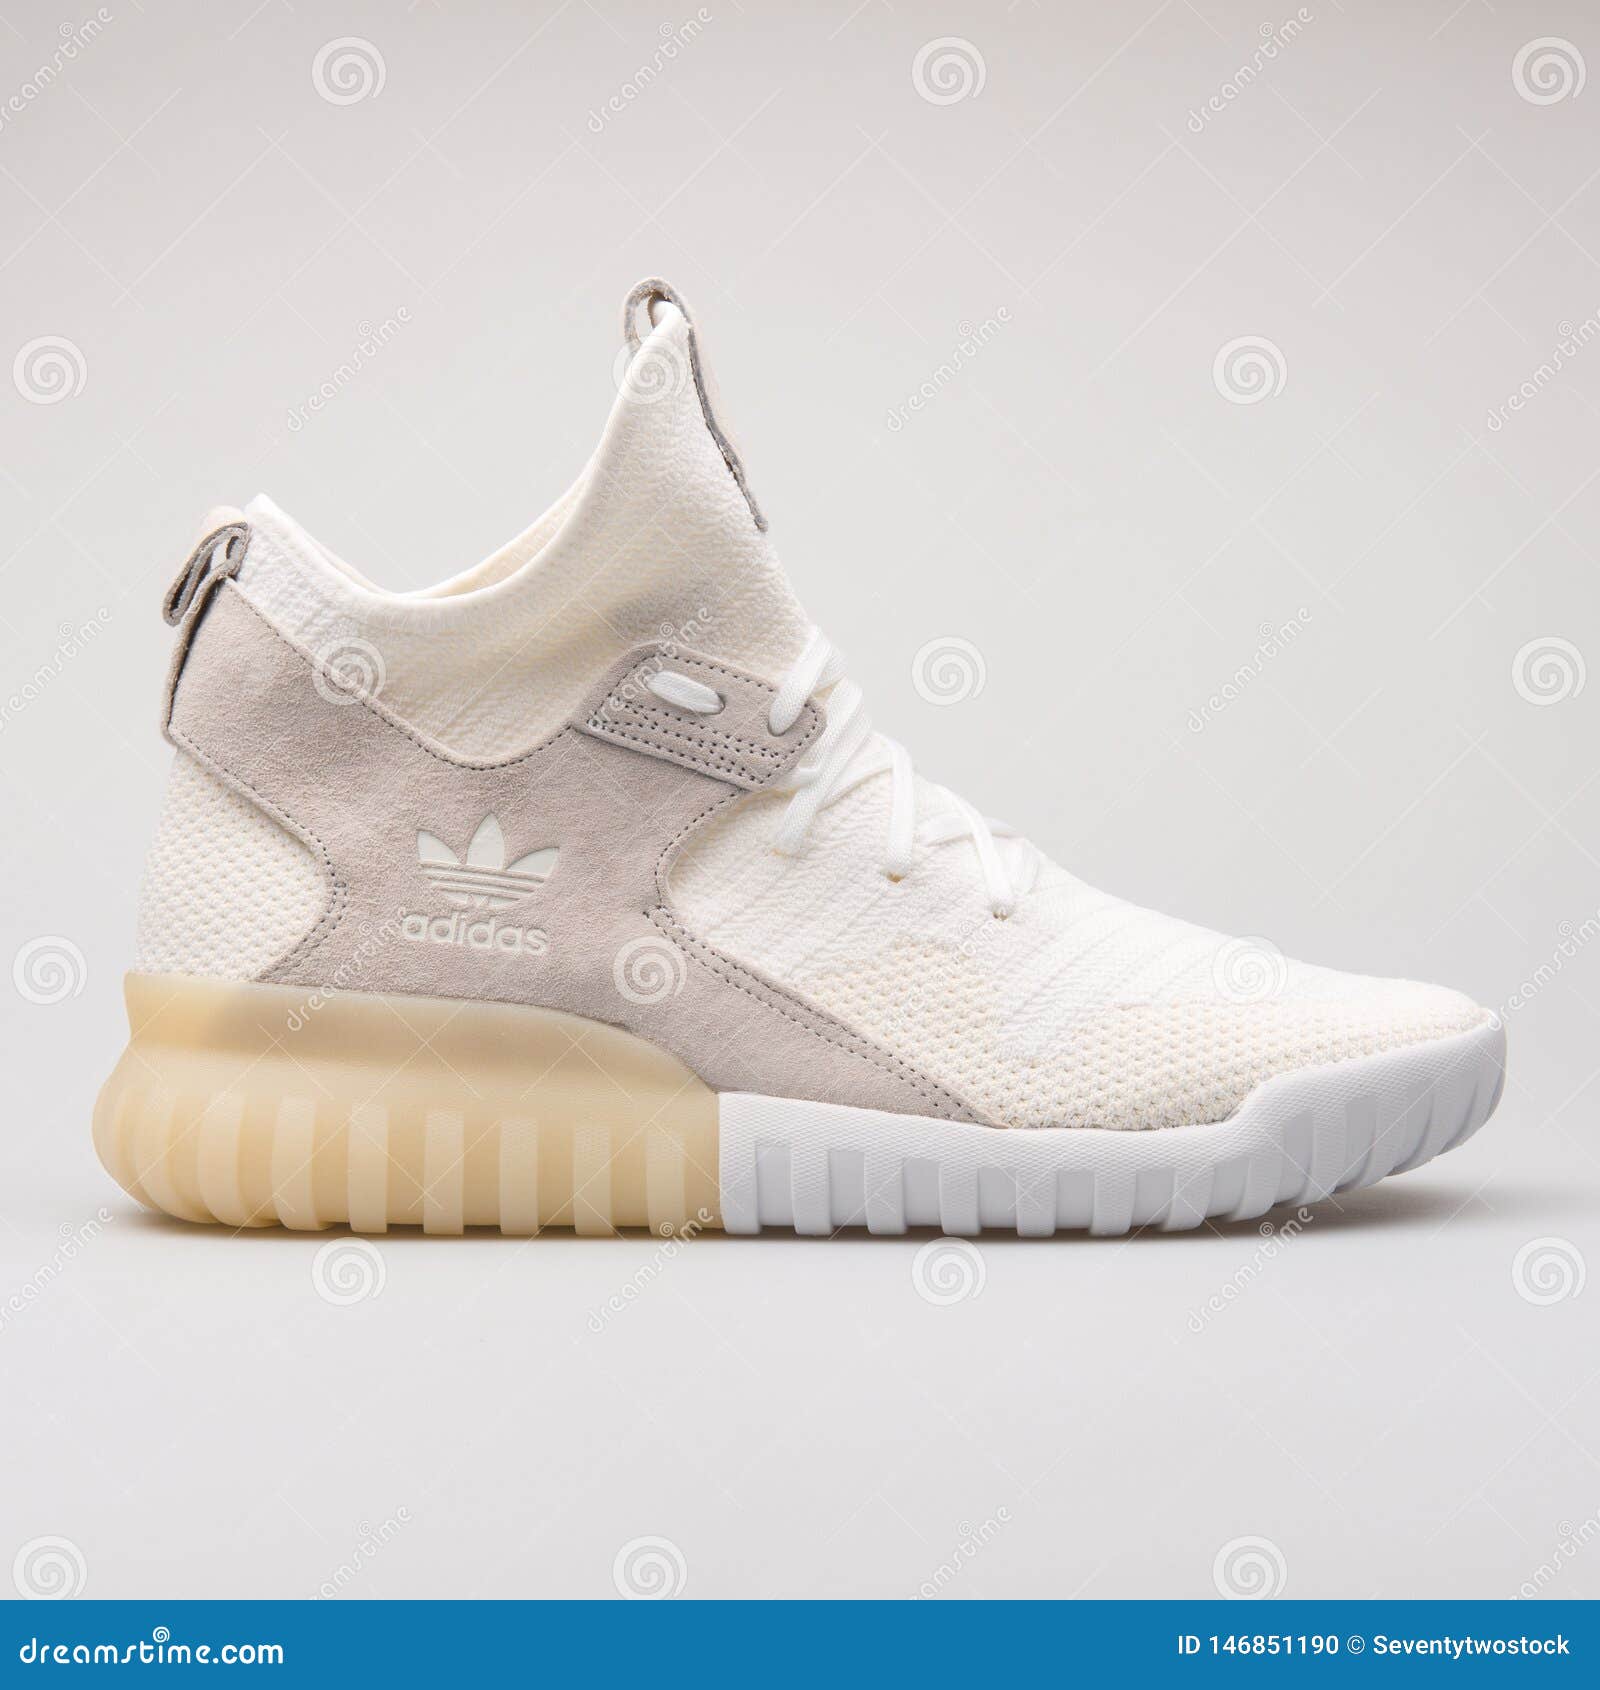 Adidas Tubular X PK White Sneaker Editorial Image - Image of adidas,  fitness: 146851190